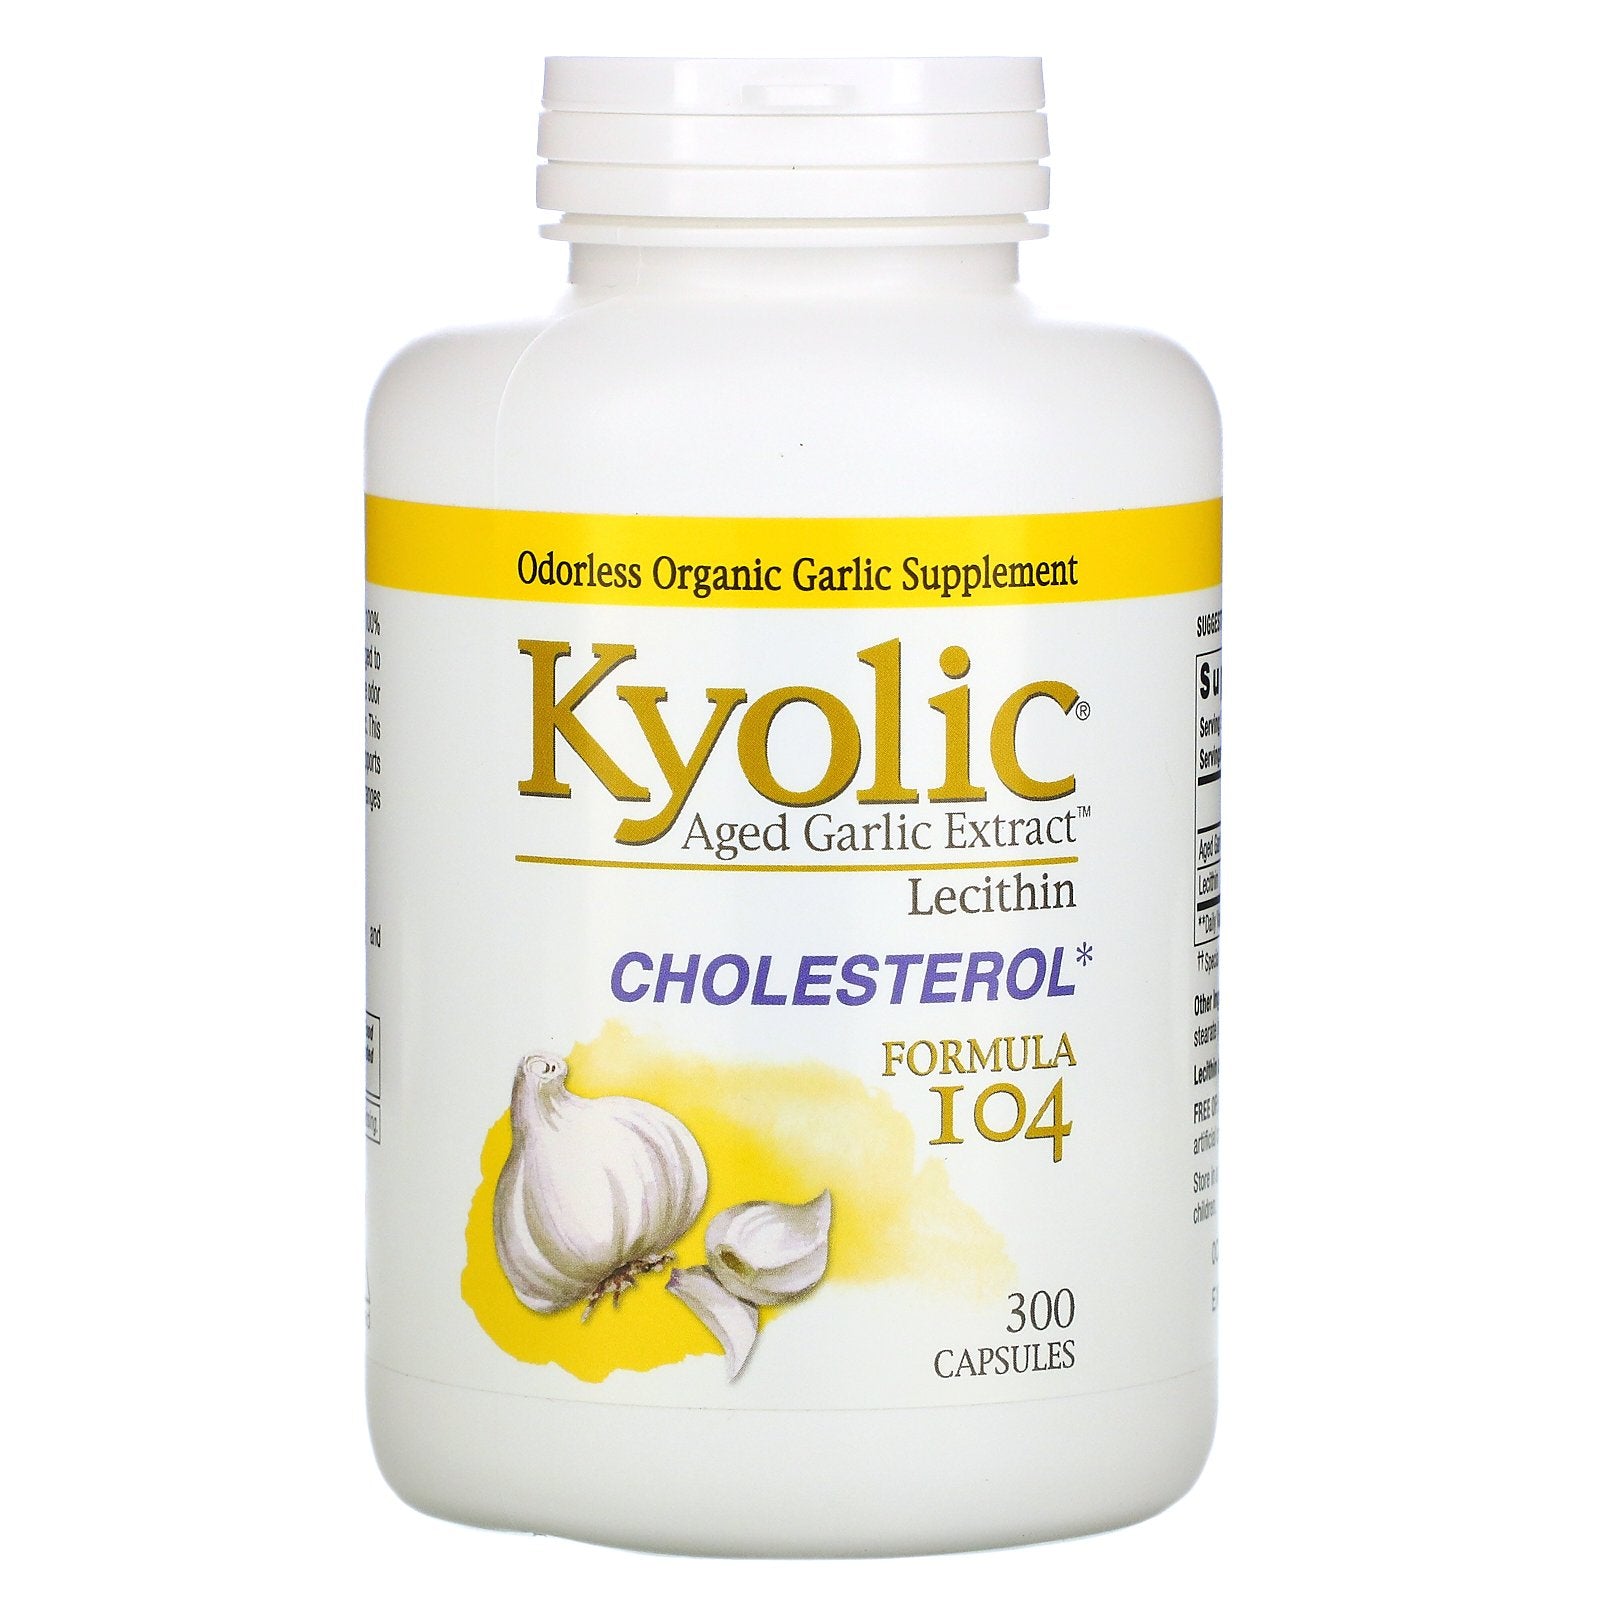 Kyolic, Aged Garlic Extract with Lecithin, Cholesterol Formula 104, 300 Capsules